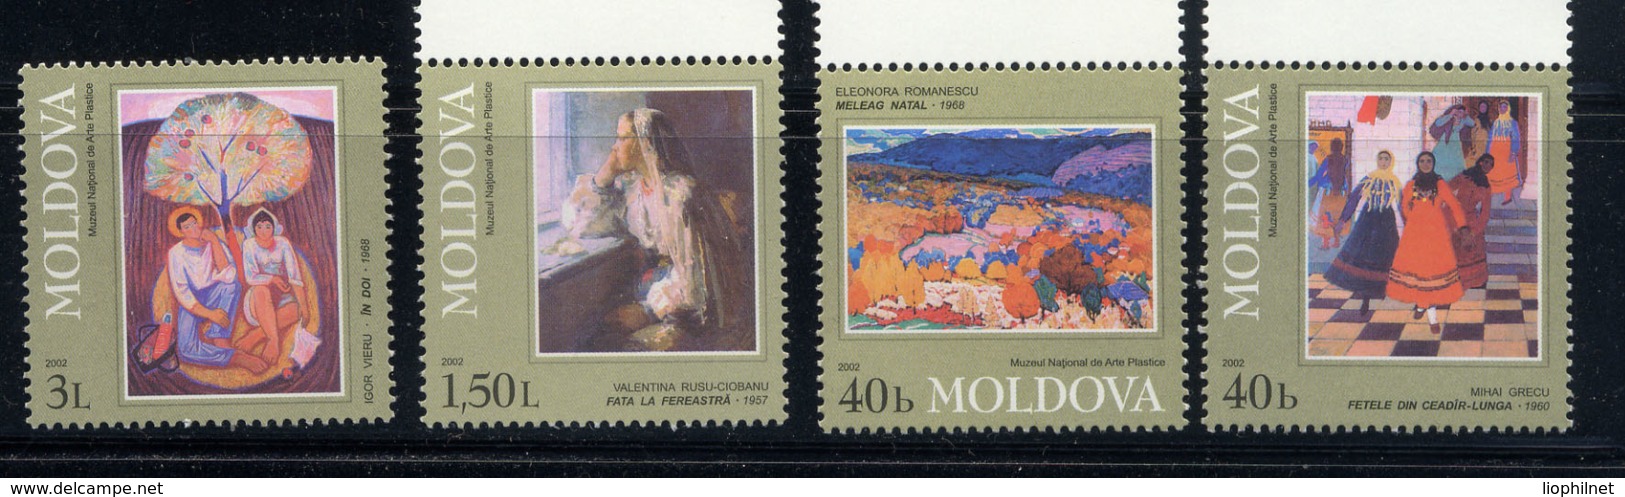 MOLDAVIE MOLDOVA 2002, TABLEAUX, 4 Valeurs, Neufs / Mint. R1481 - Moldavie